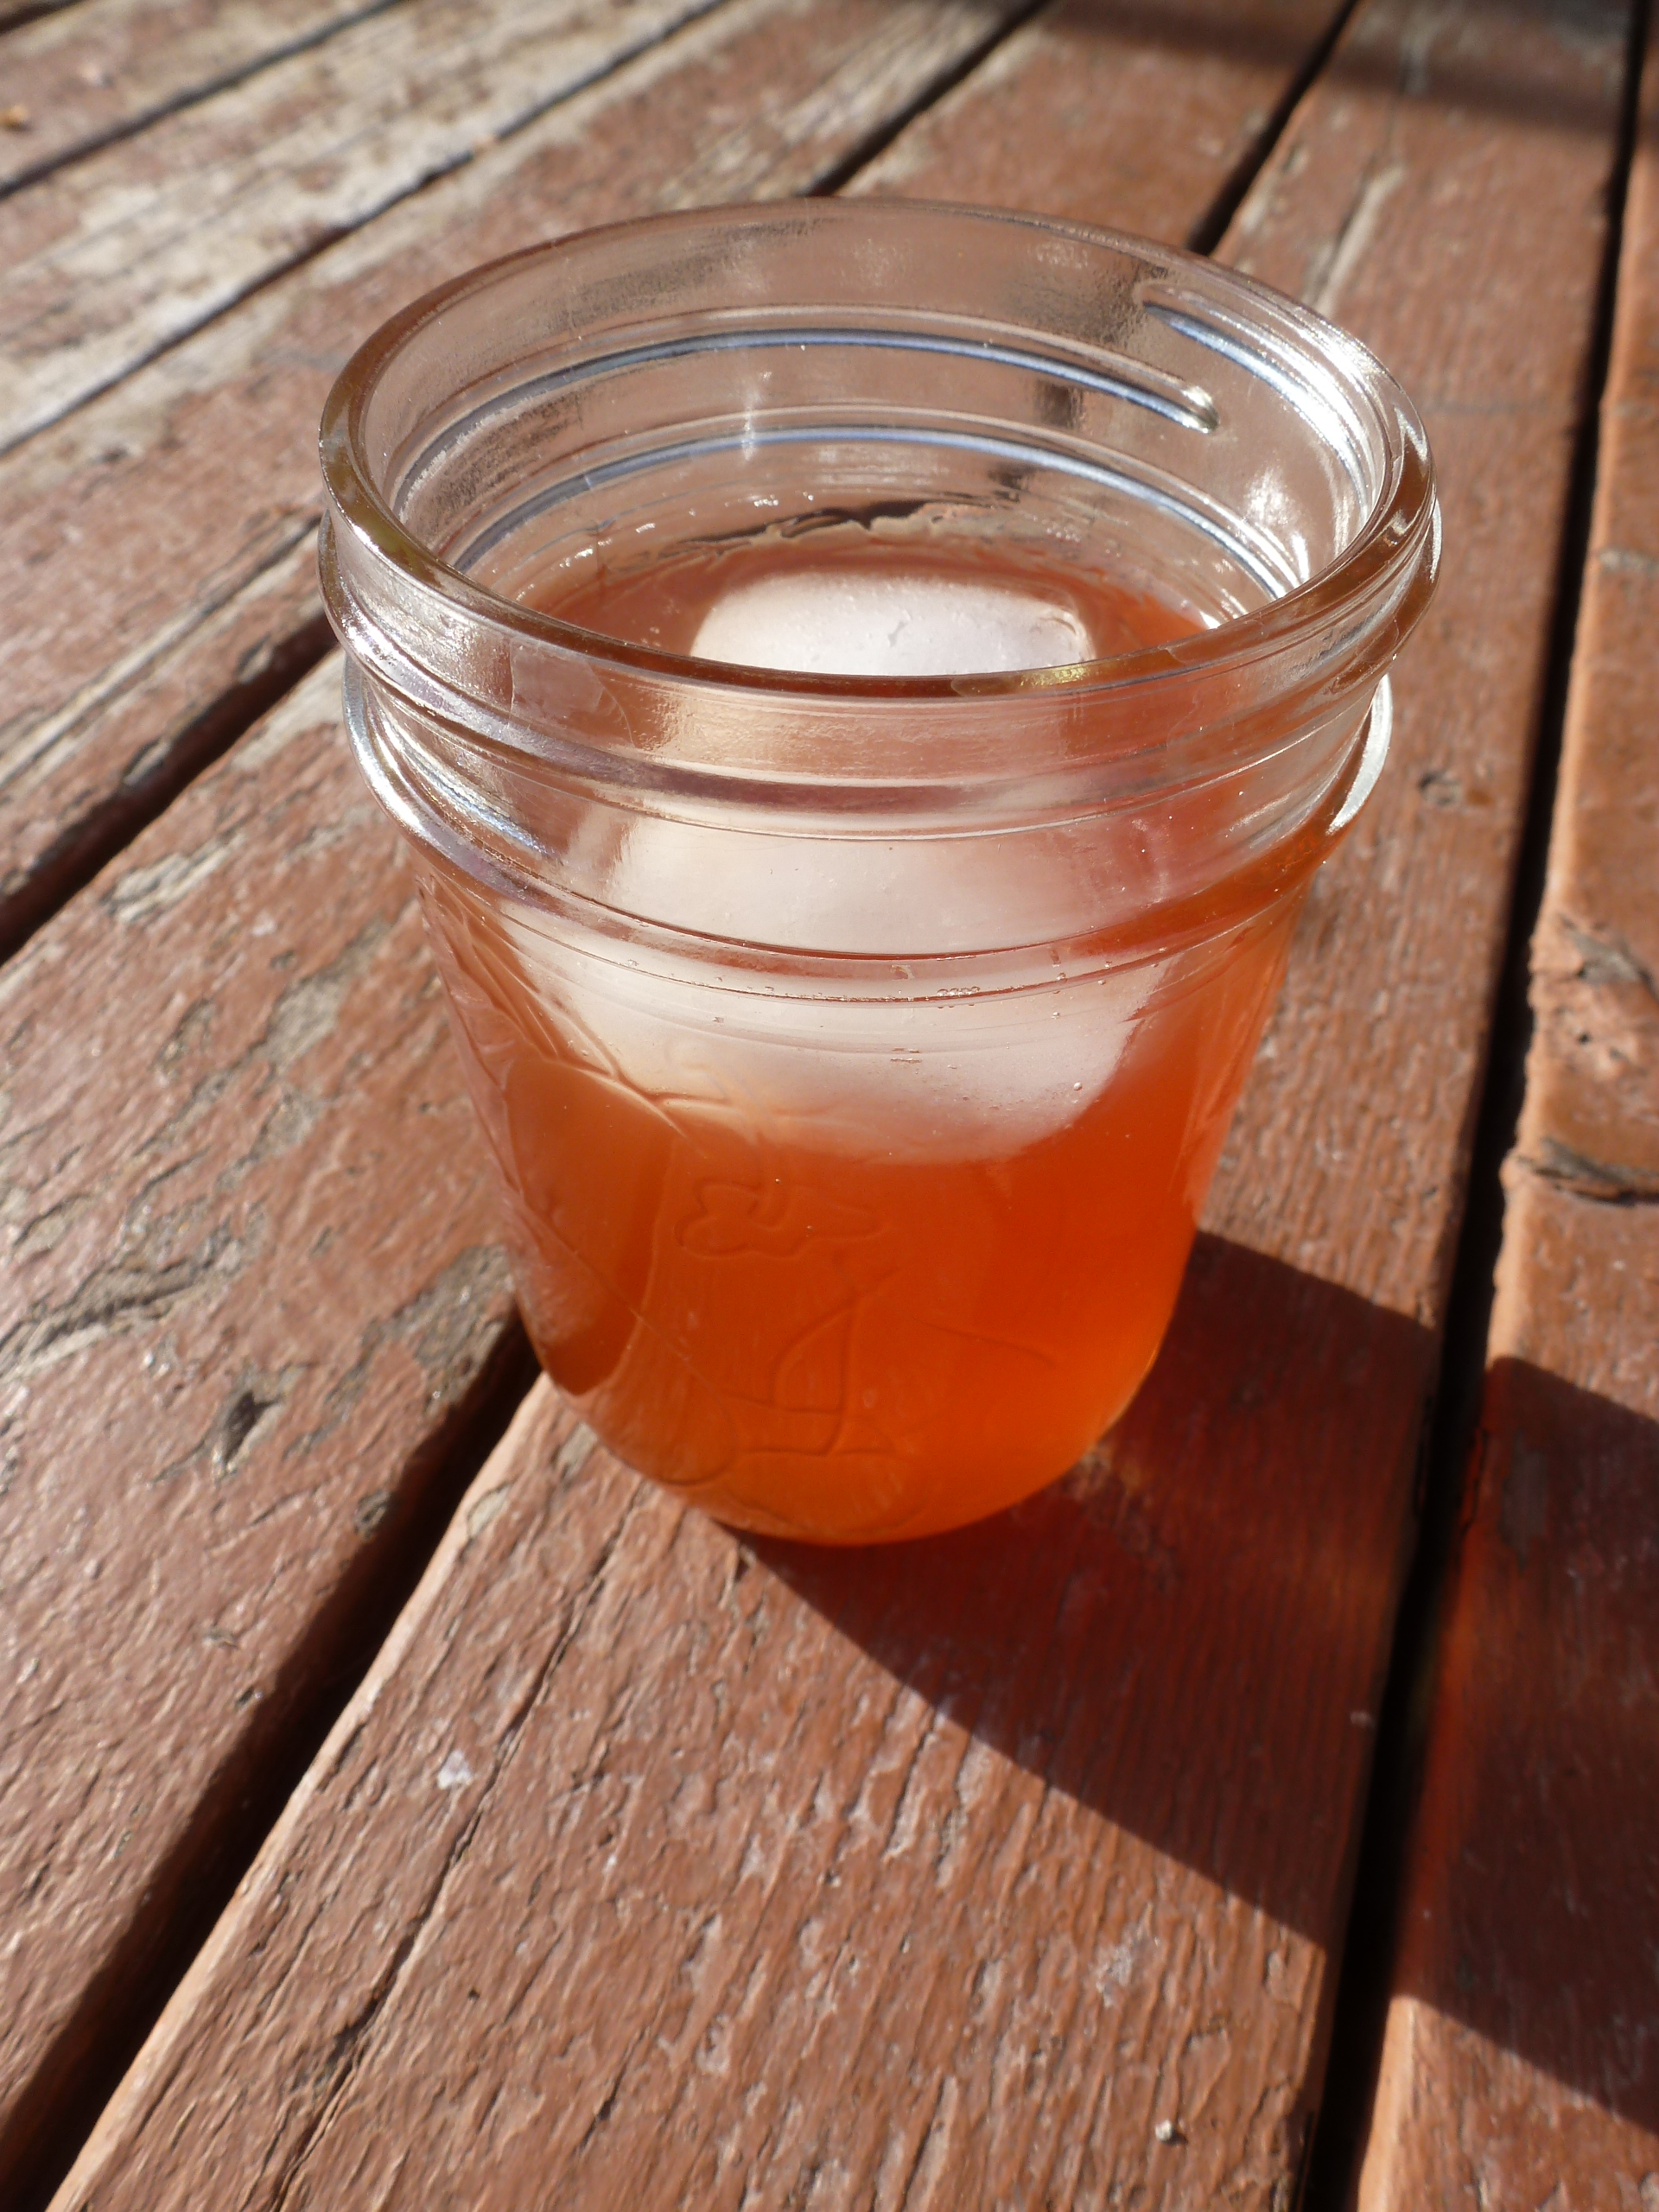 A glass of rhubarb iced tea